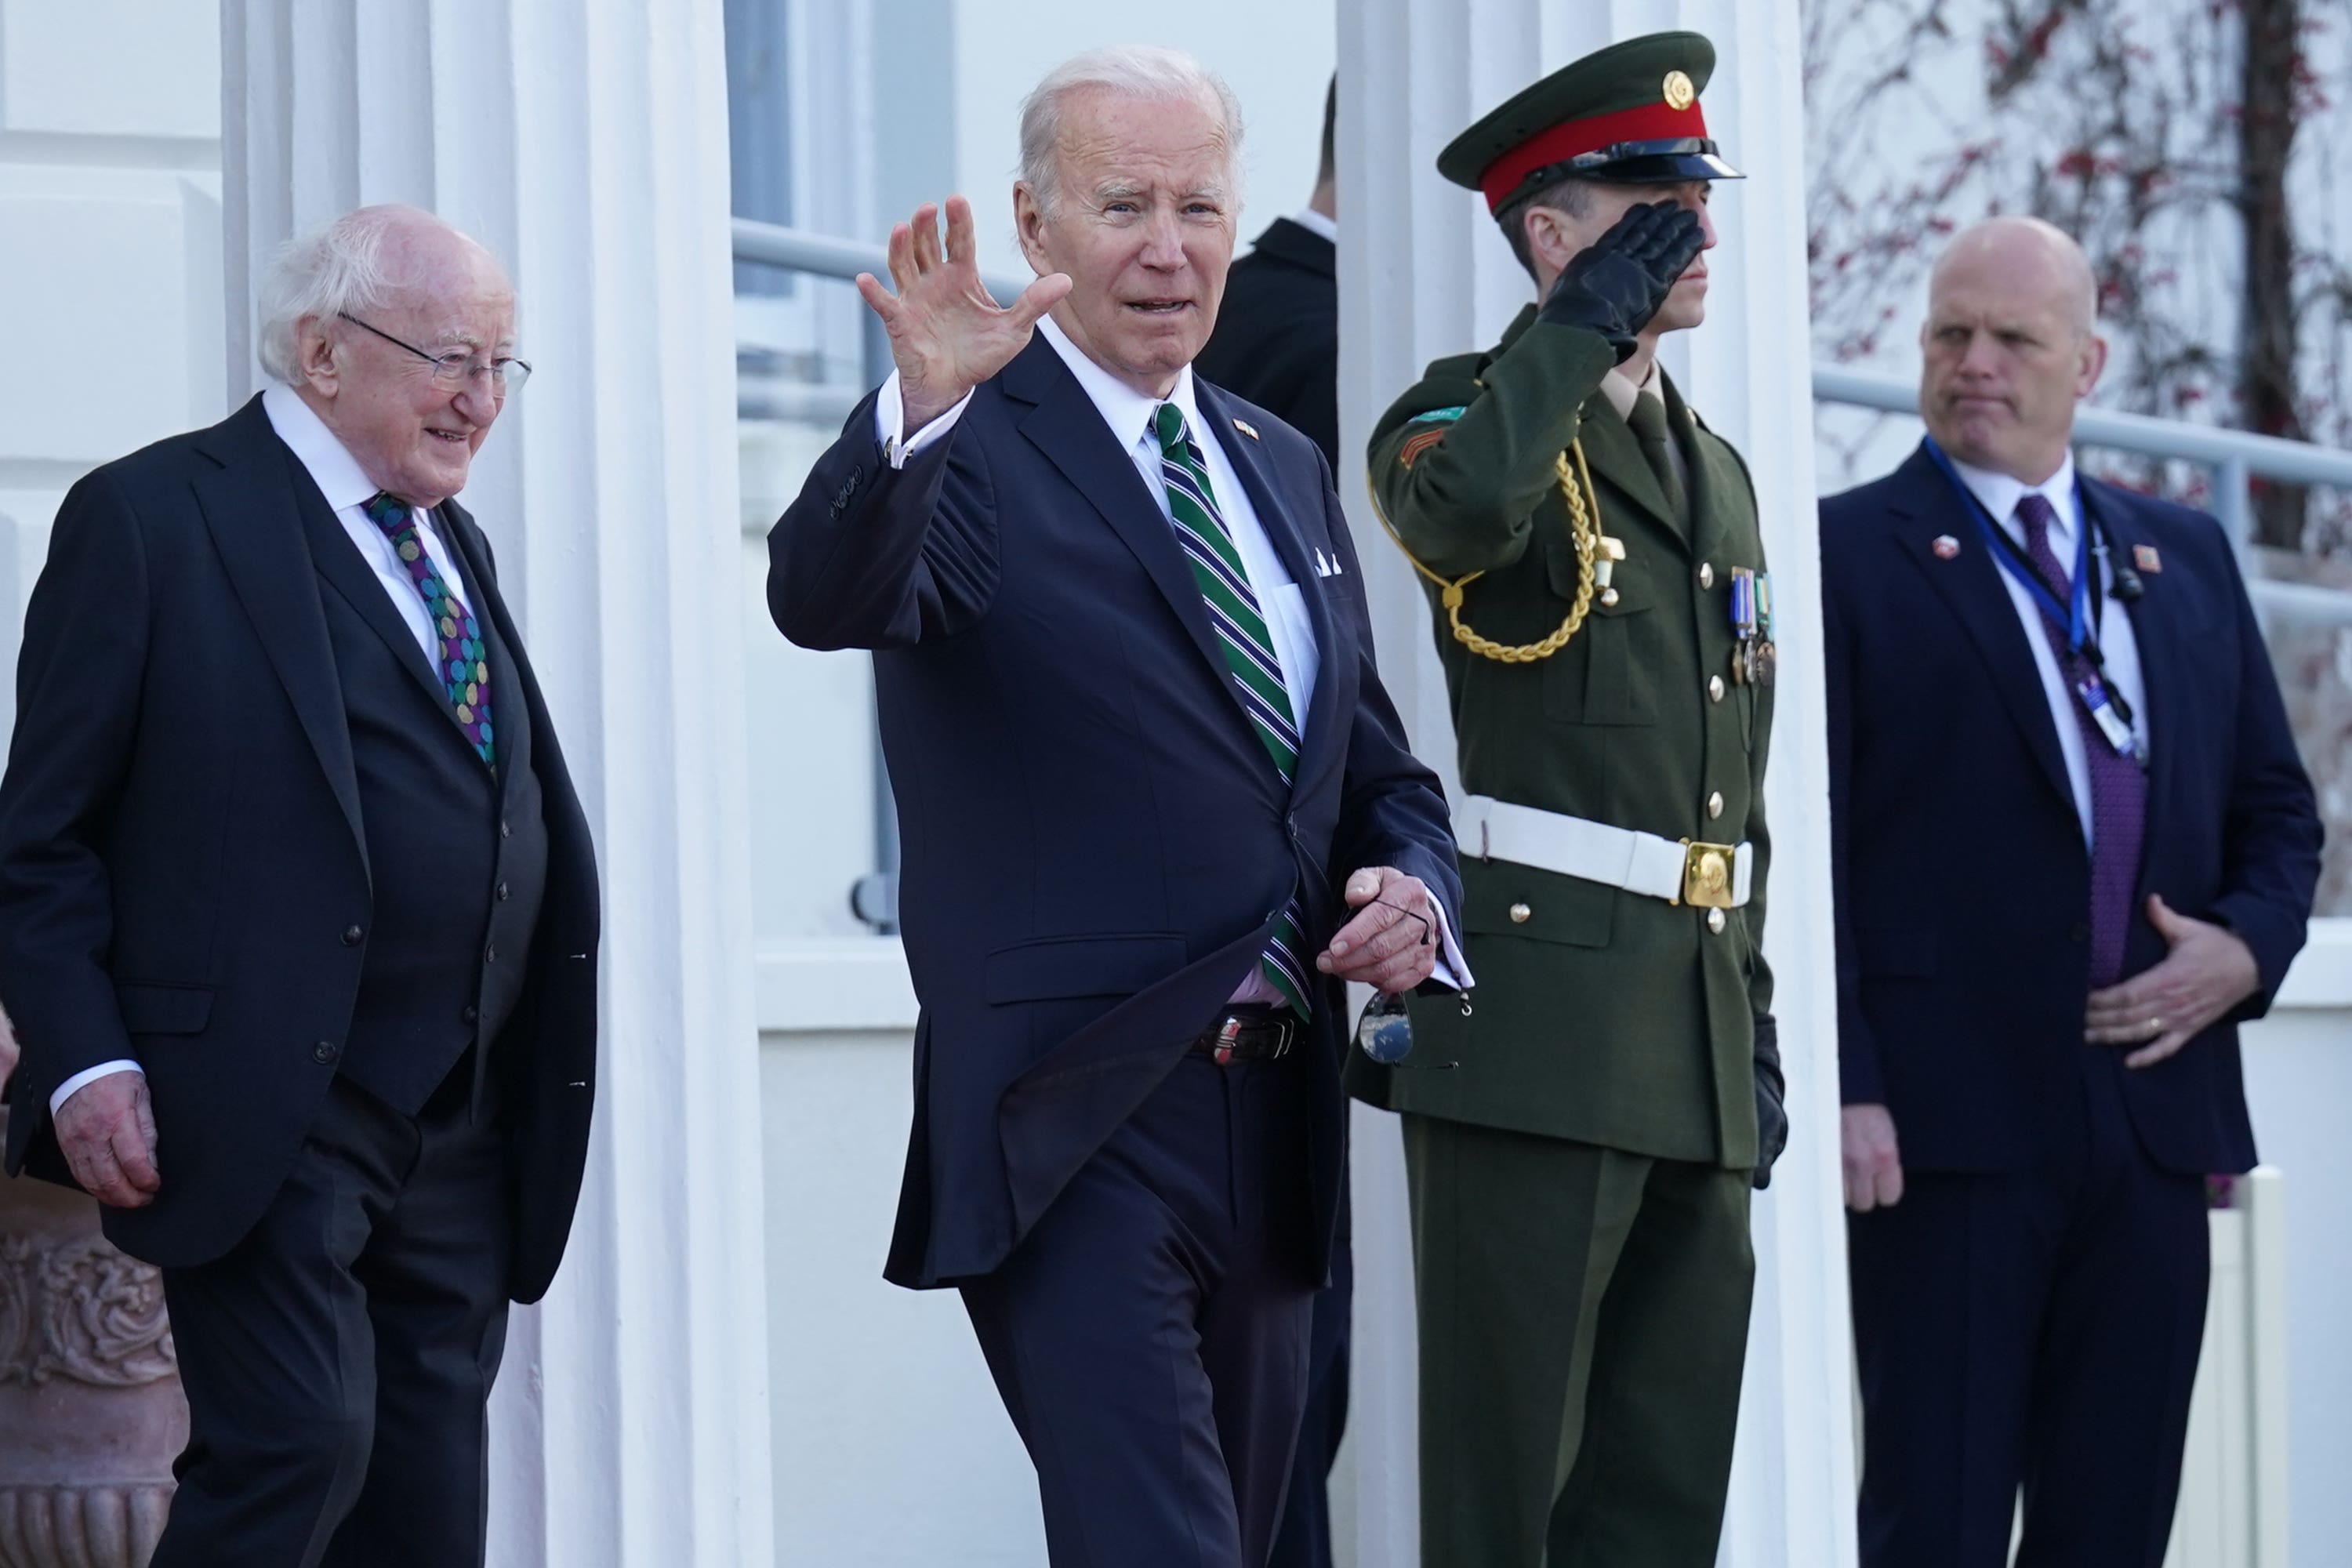 Higgins walks behind Biden as the US president departs following a meeting at Aras an Uachtarain